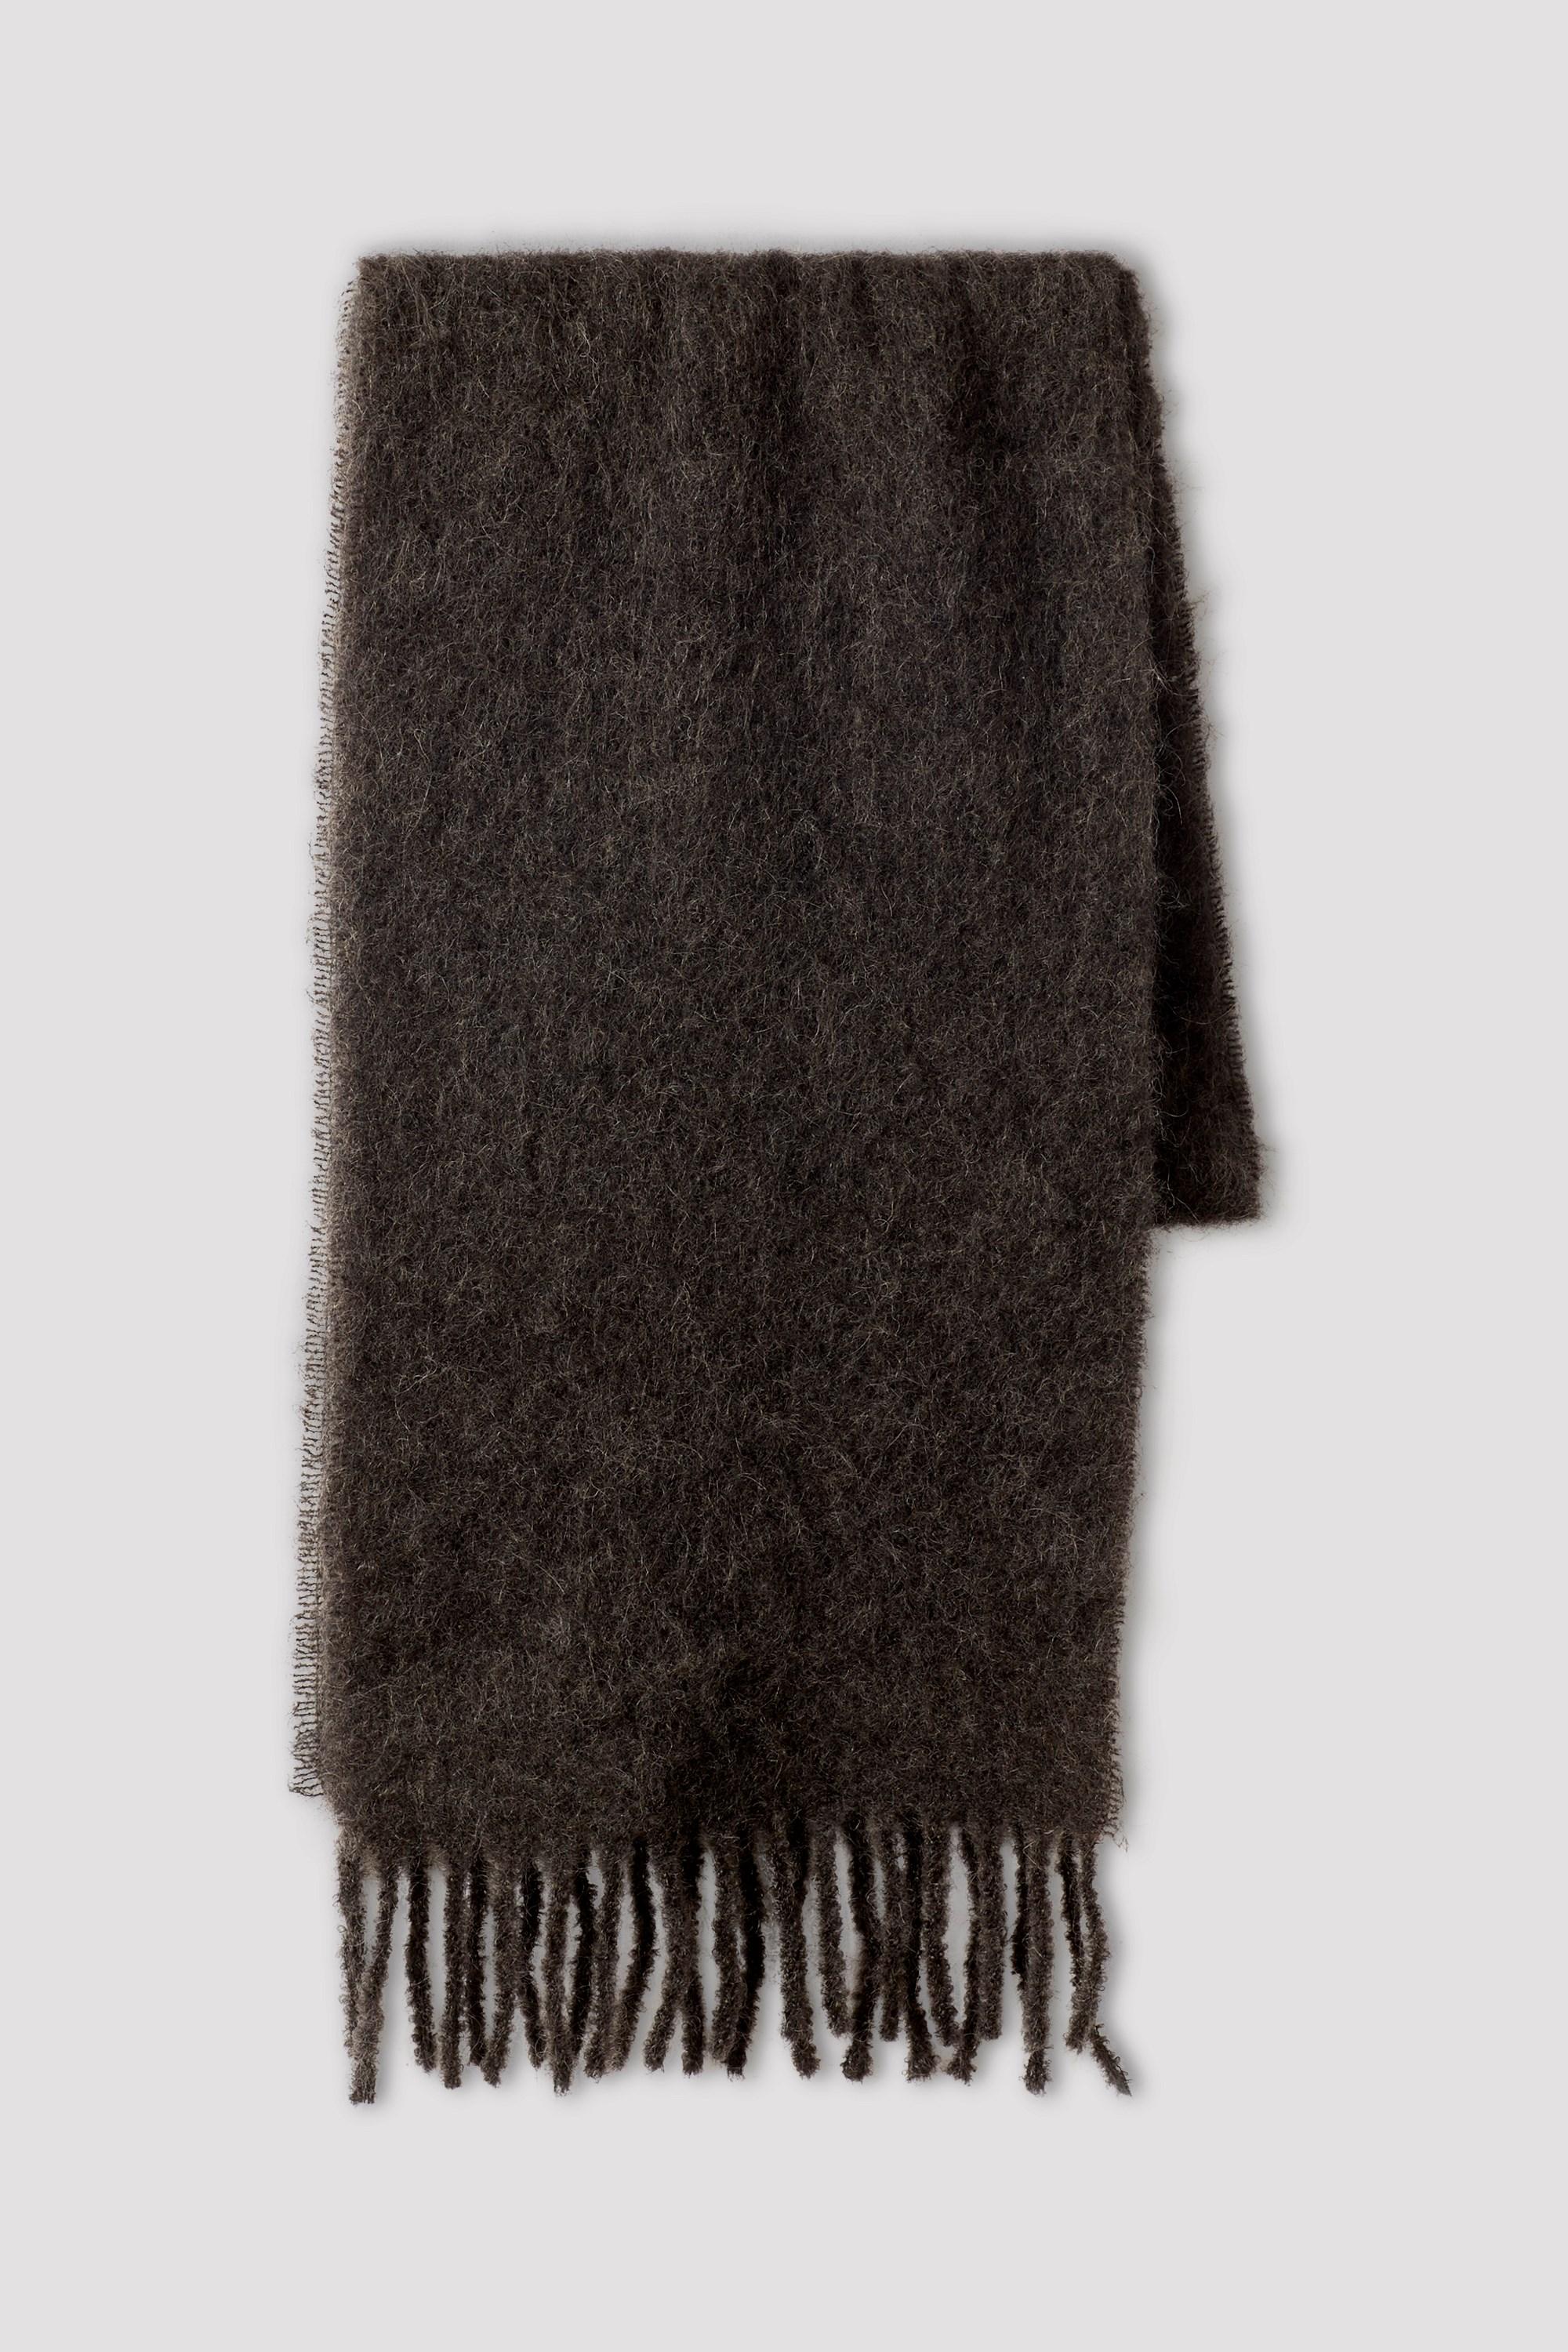 Filippa K Slim Chunky Wool Scarf in Charcoal Melange (Gray) - Lyst